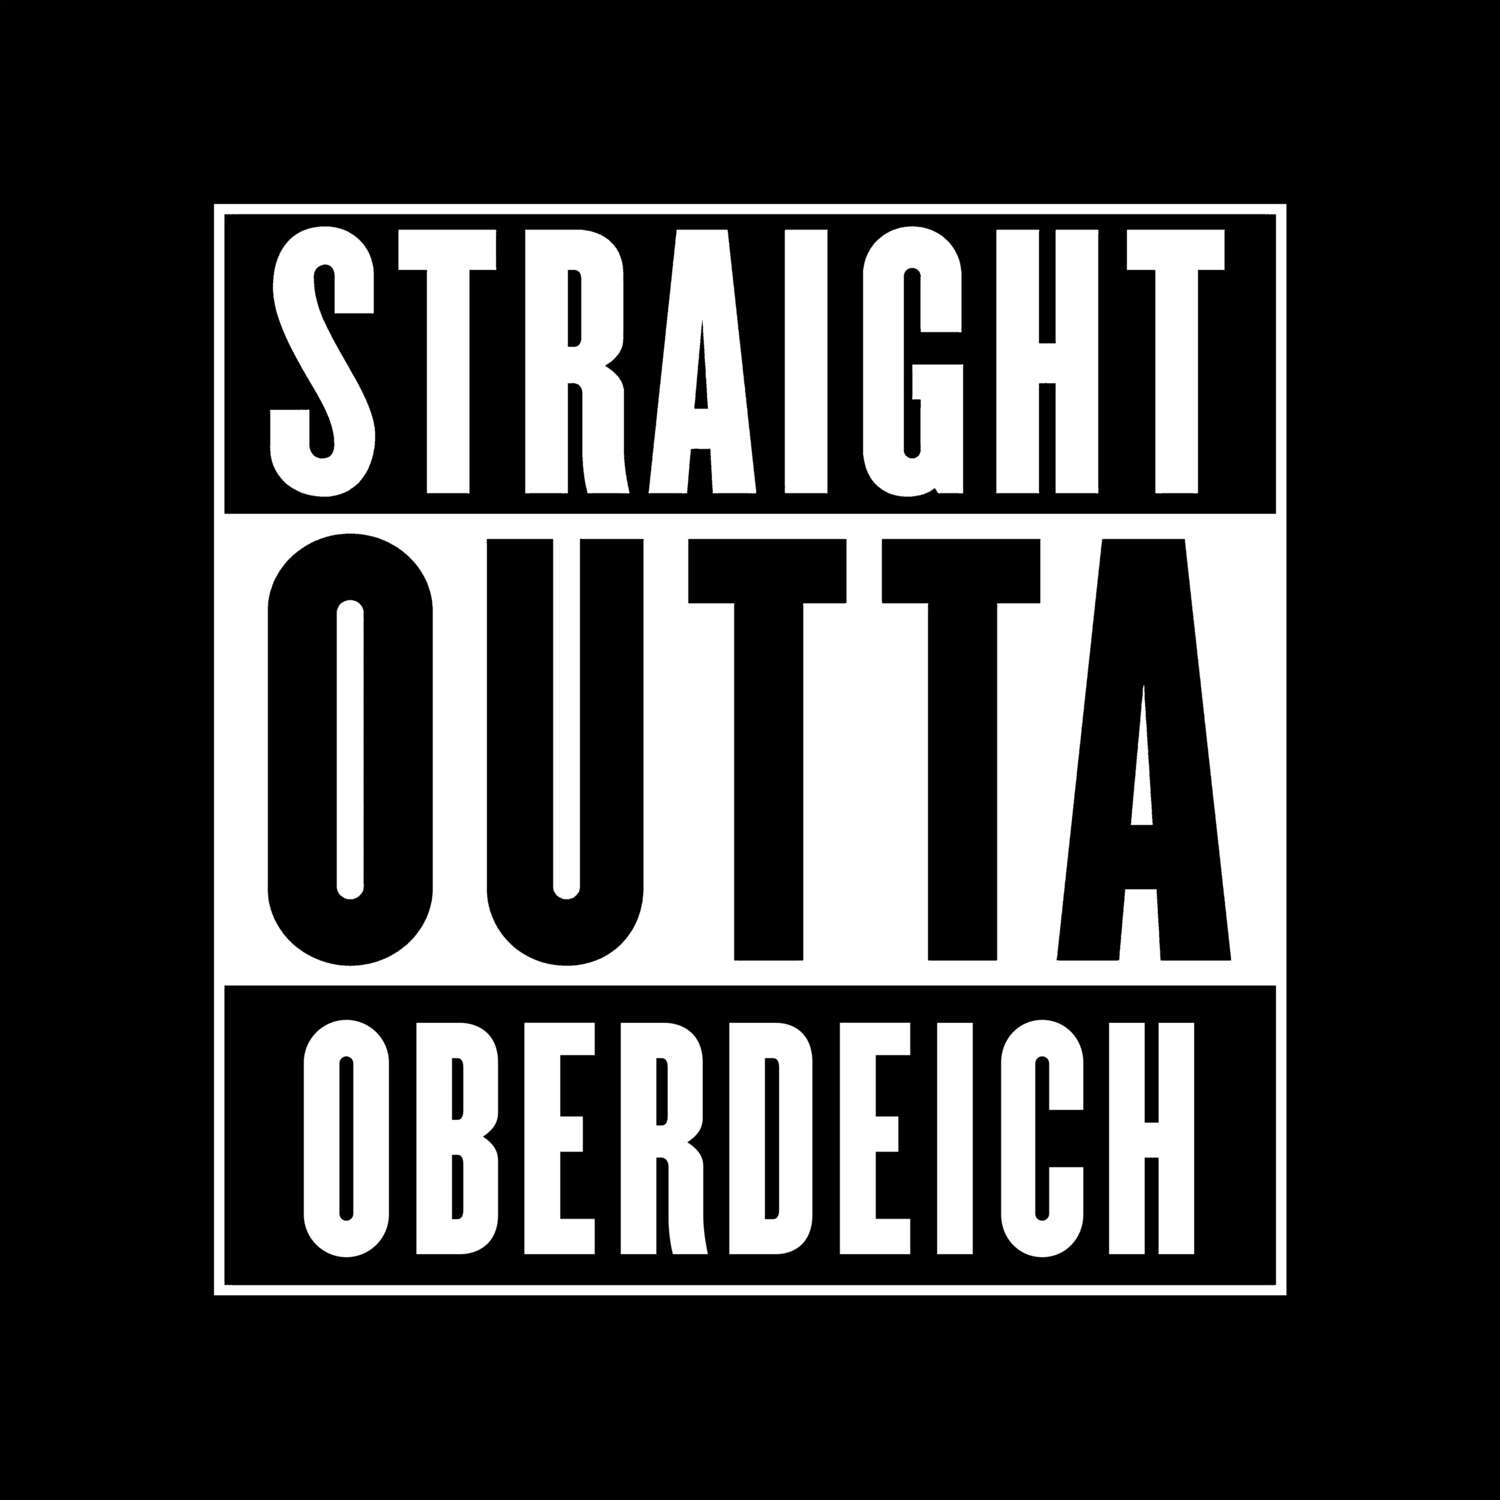 Oberdeich T-Shirt »Straight Outta«